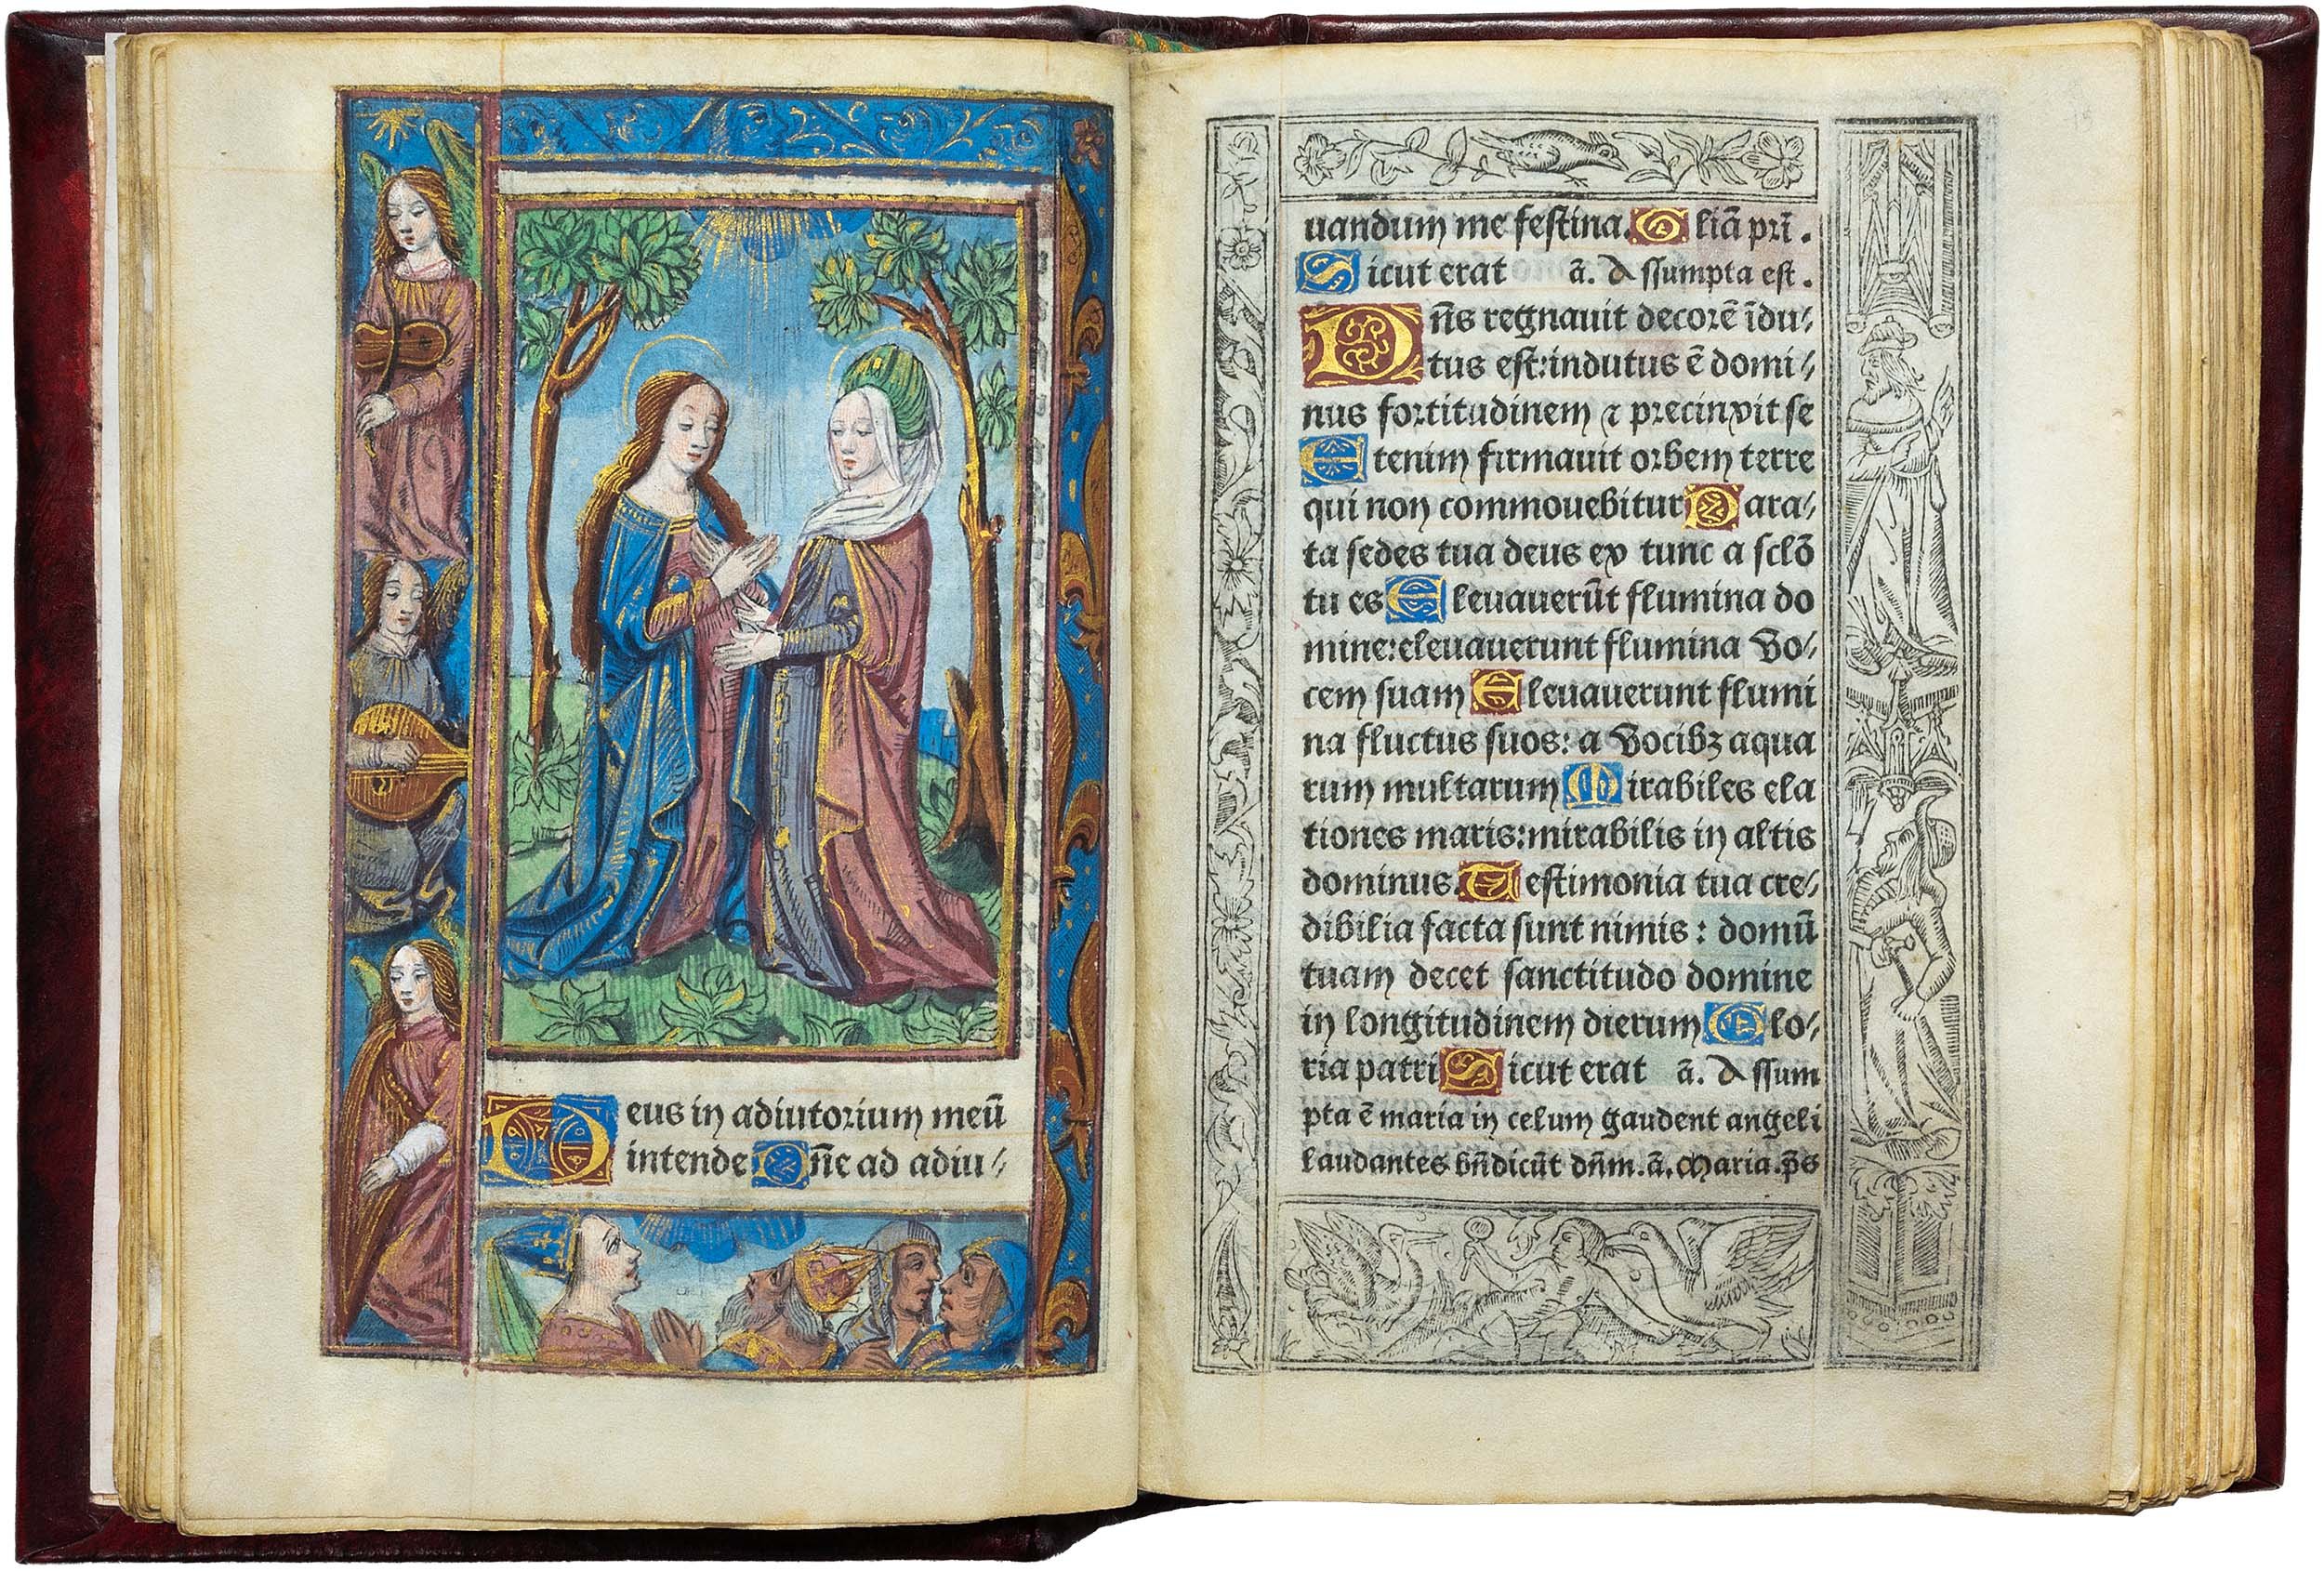 horae-bmv-early-printed-book-of-hours-1487-dupre-16.jpg